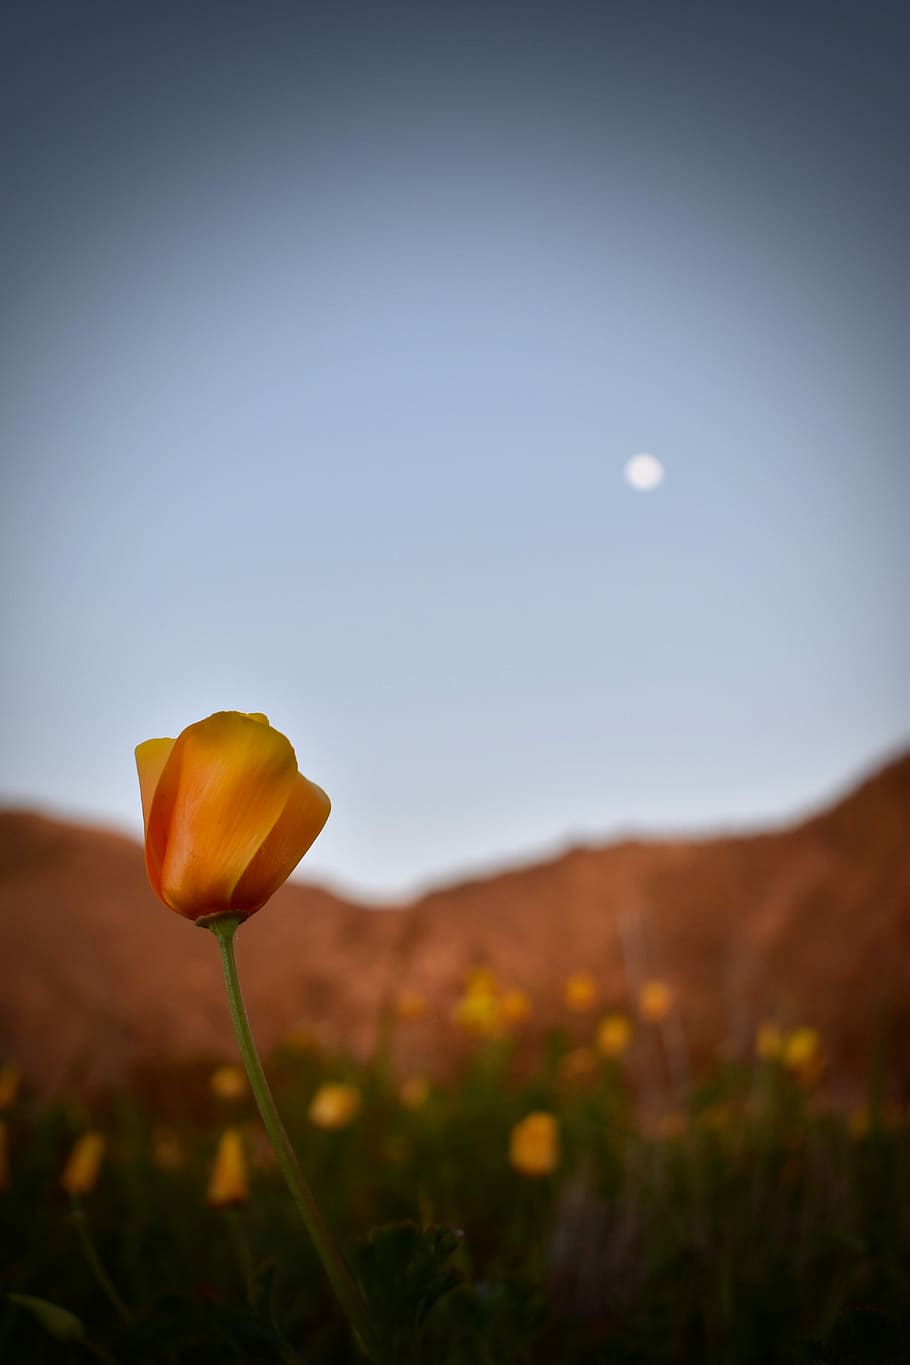 shallow, focus photography, yellow, california poppy field, flower, nature, sky, outdoors, field, sunset